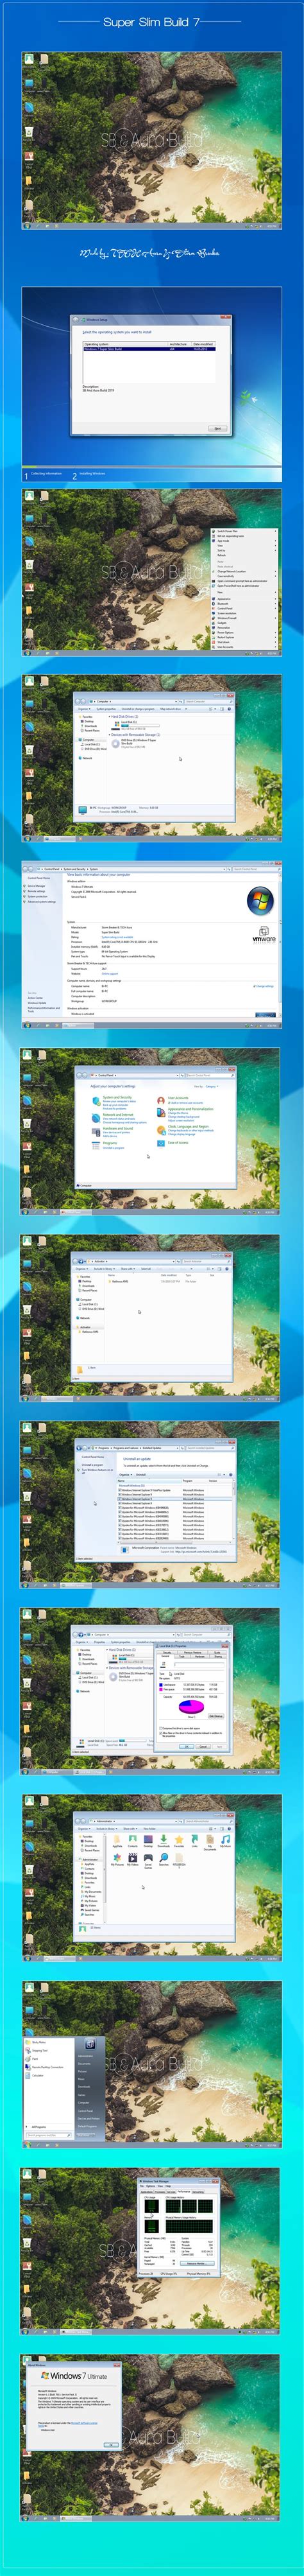 Windows 7 Ultimate Super Slim Edition X64 June 2019 Softarchive